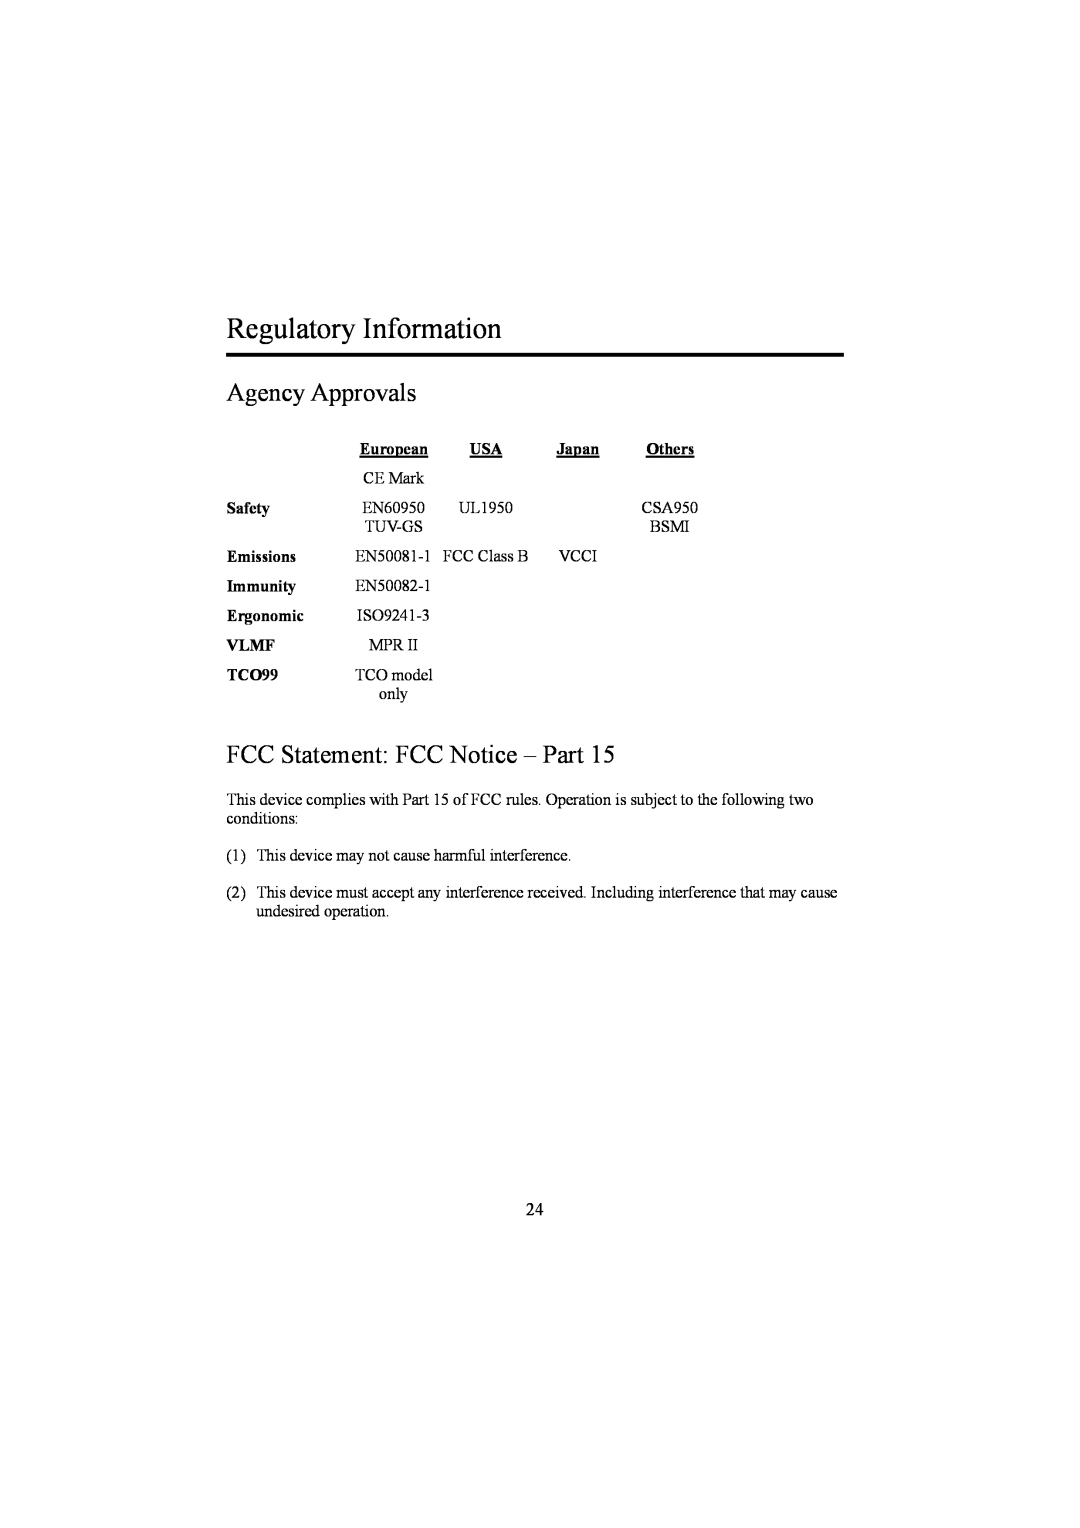 Planar PE1500 Regulatory Information, Agency Approvals, FCC Statement FCC Notice - Part, European, Japan, Safety, Immunity 